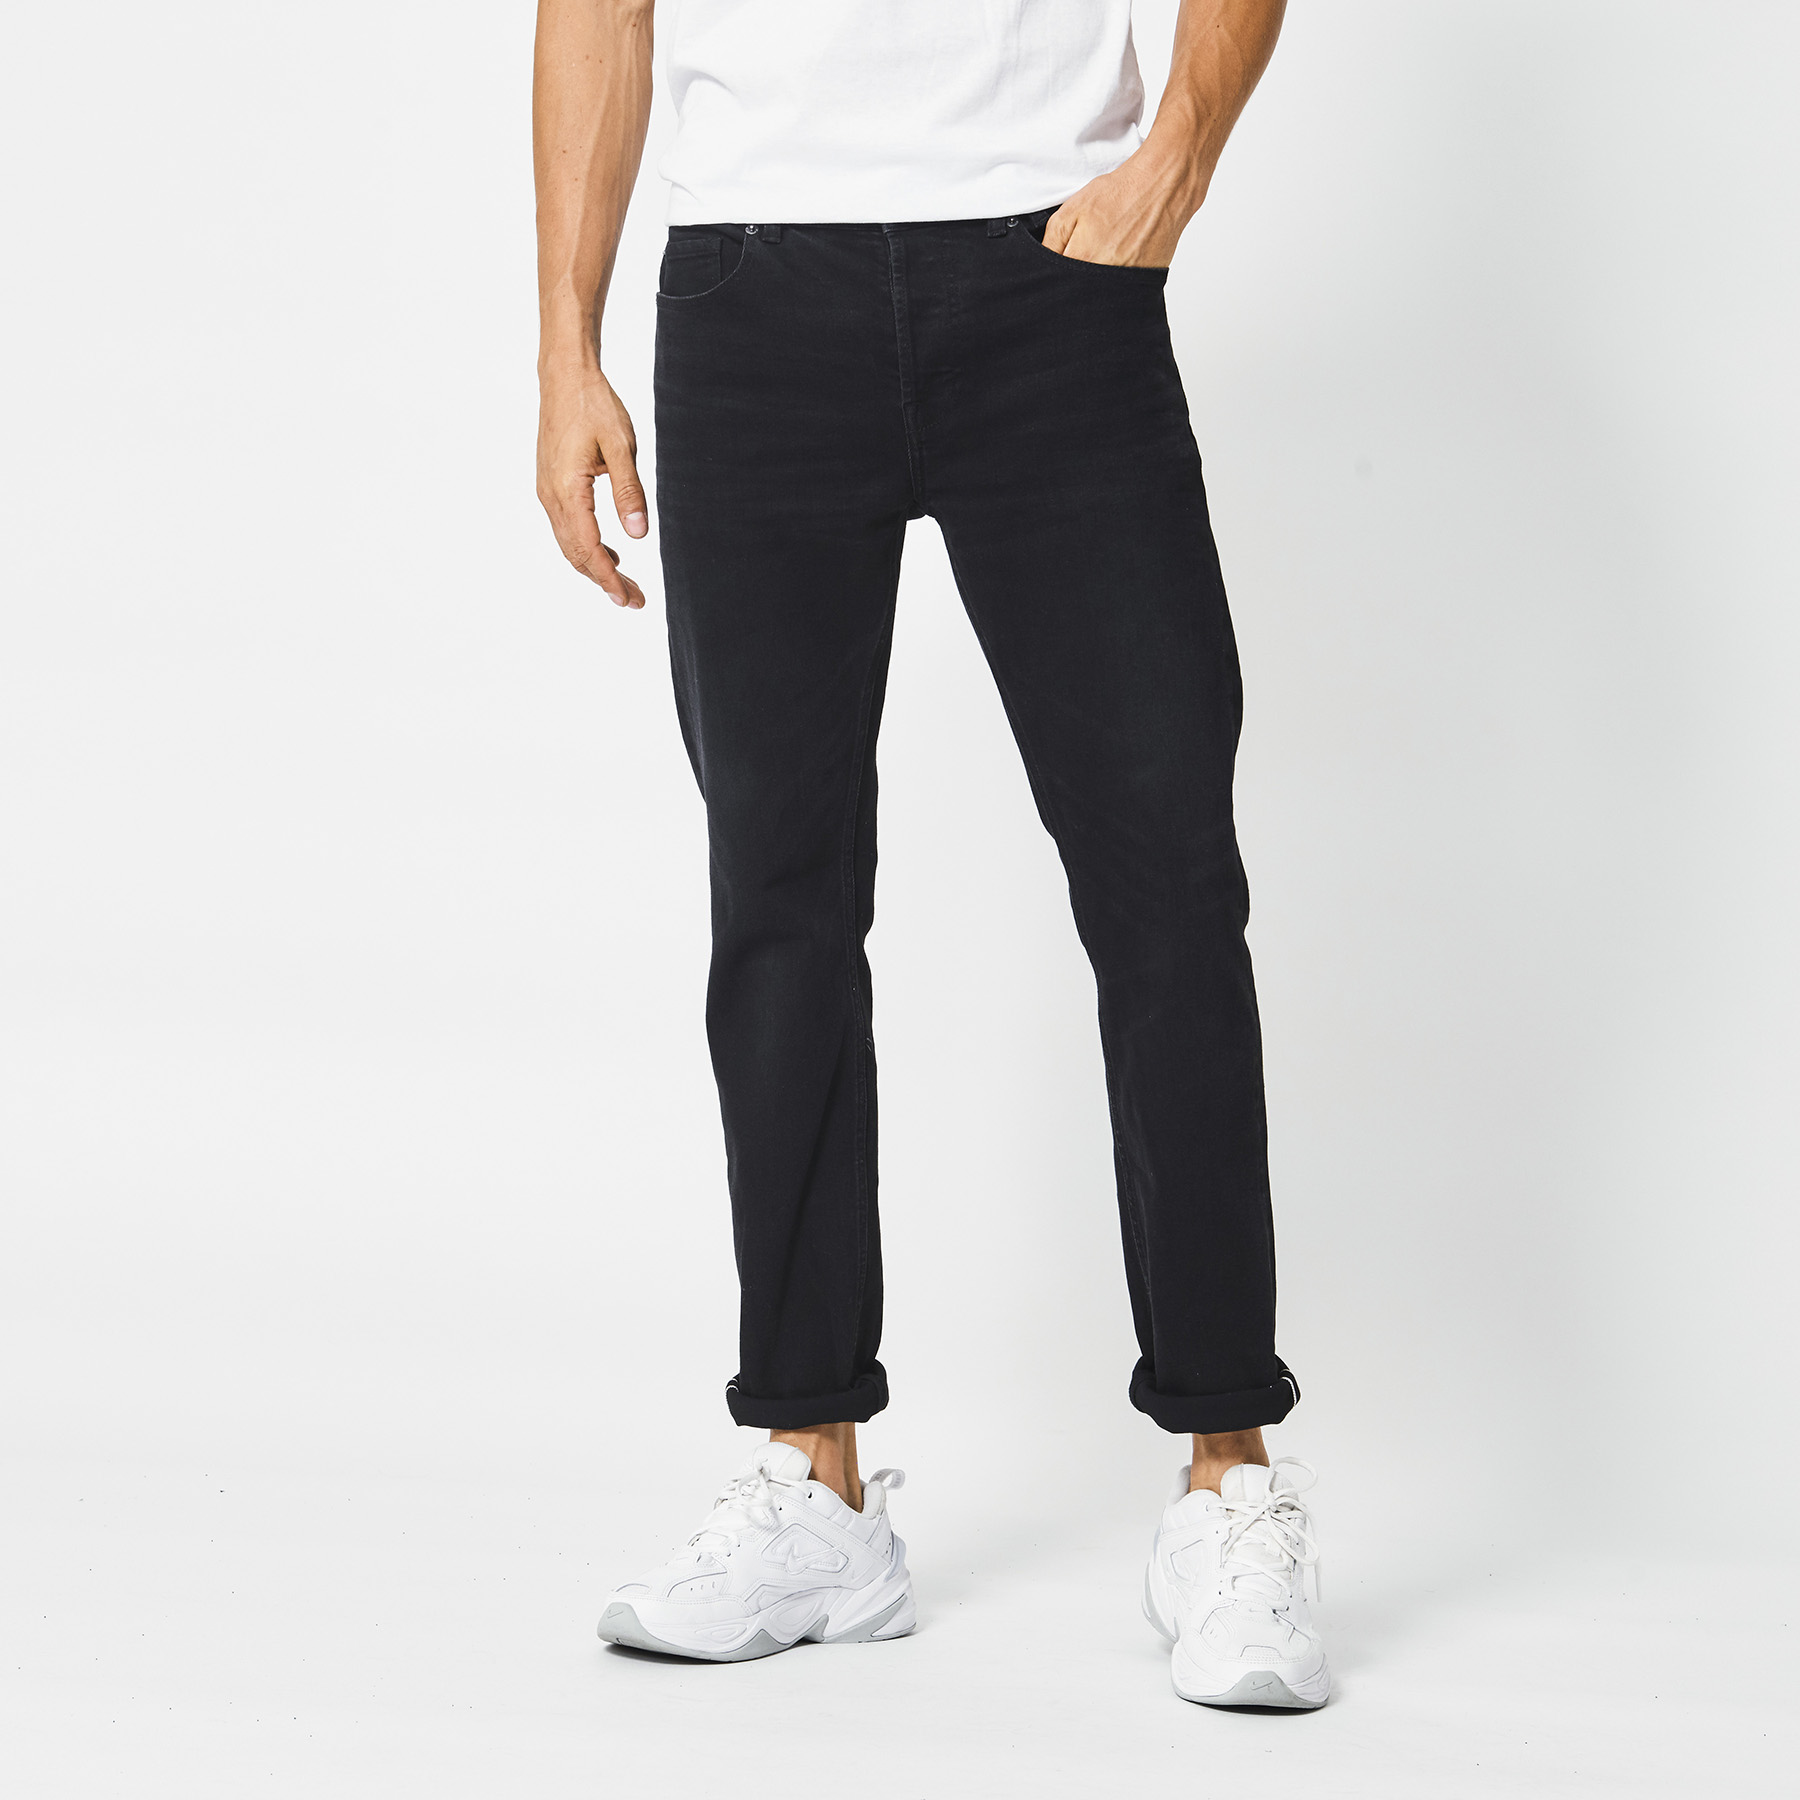 Zwarte Stretch Jeans Heren Netherlands, SAVE 32% - horiconphoenix.com